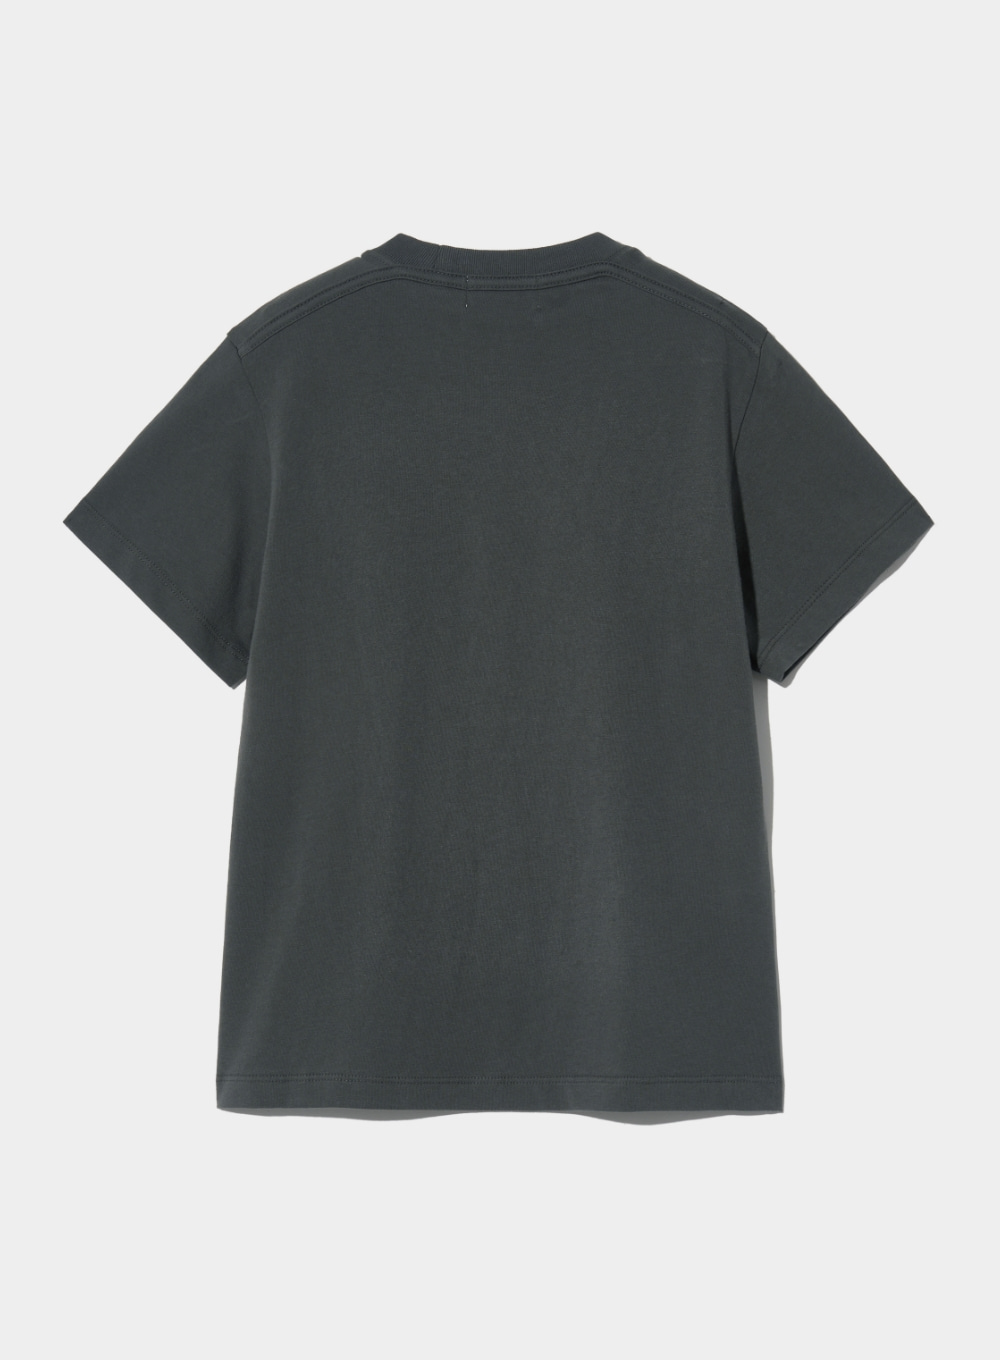 (W) Sailing Graphic T-Shirt - Resort Charcoal